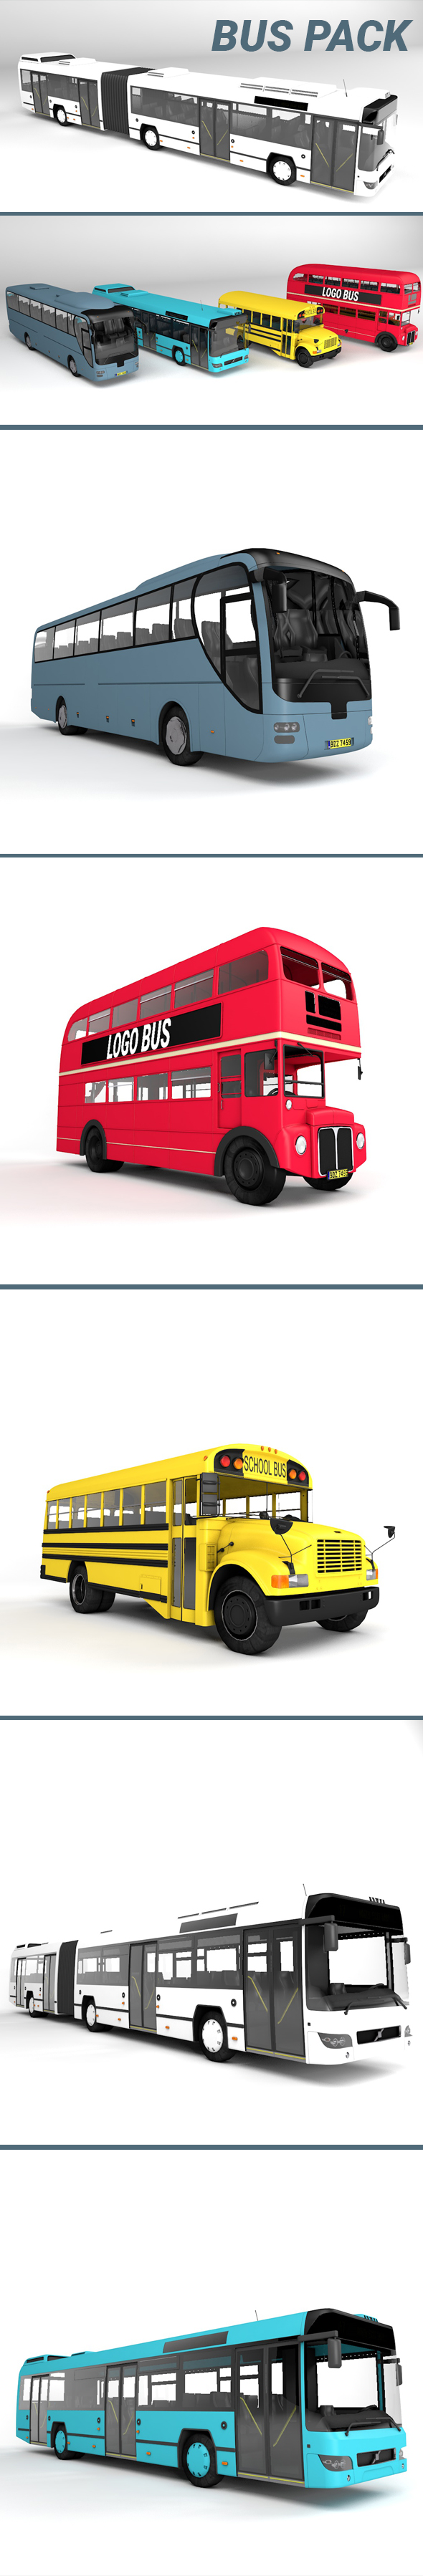 Bus / PACK 5 Bus